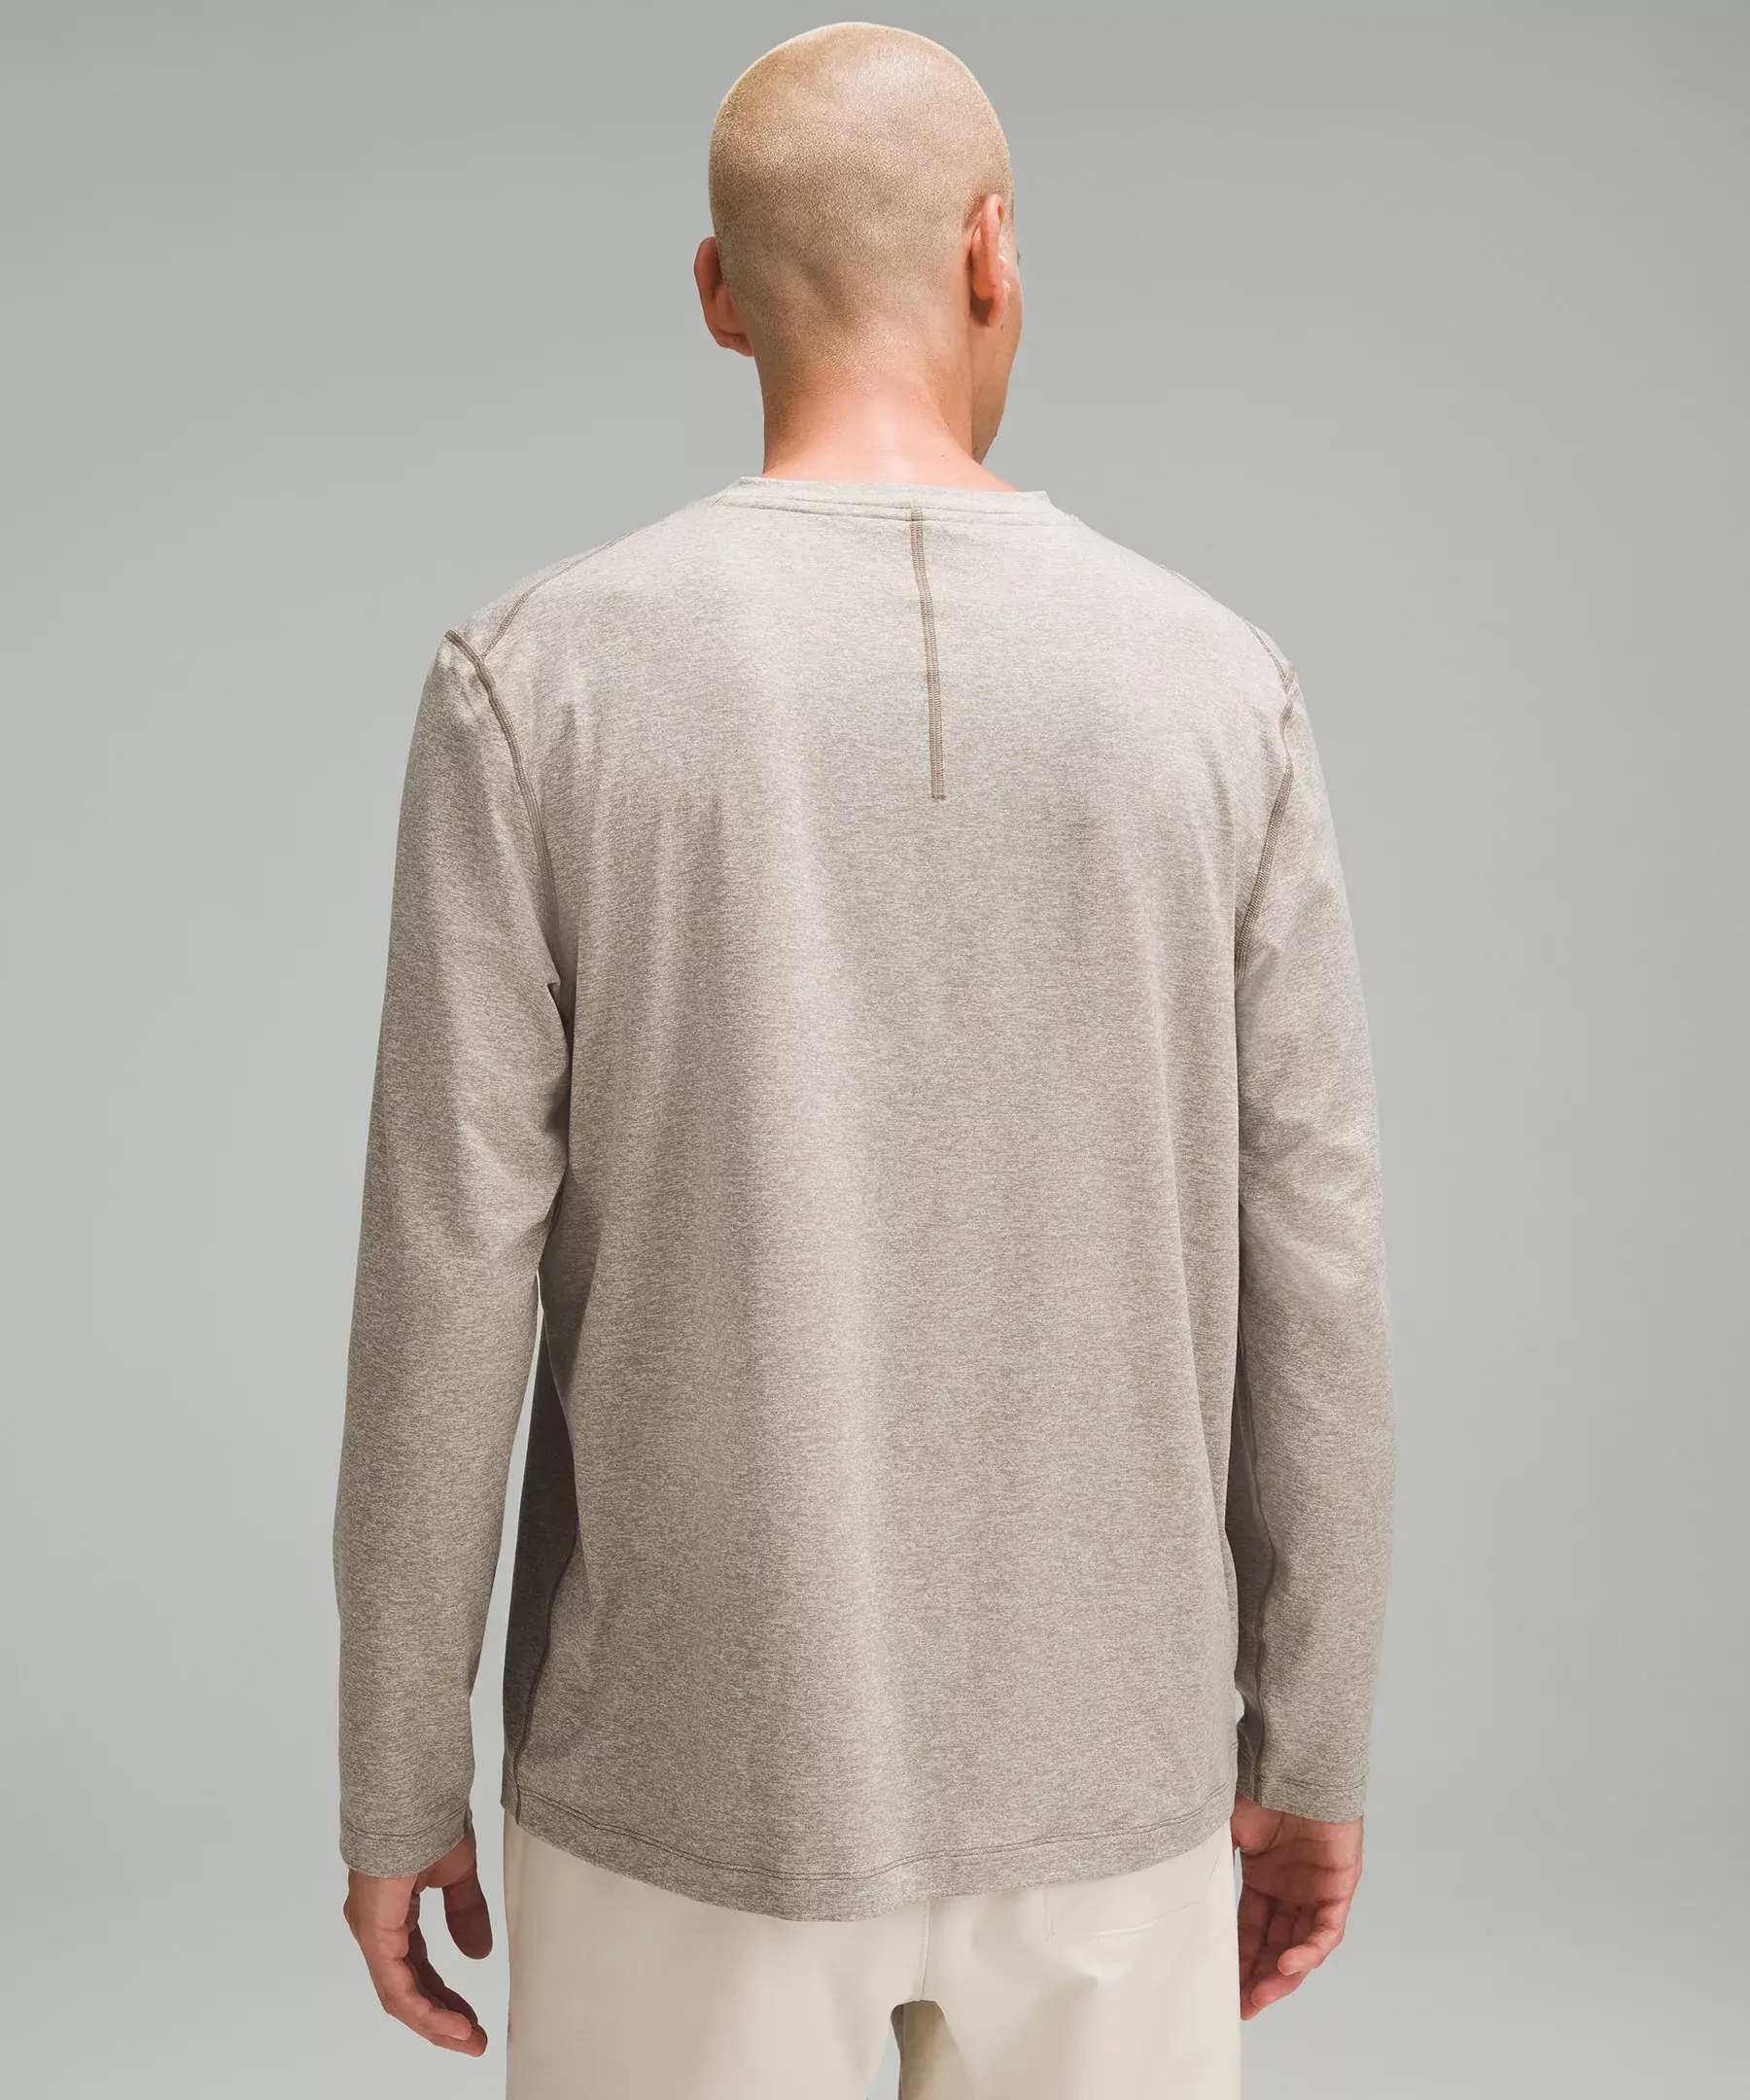 Lululemon Soft Jersey Long-Sleeve Shirt. 3